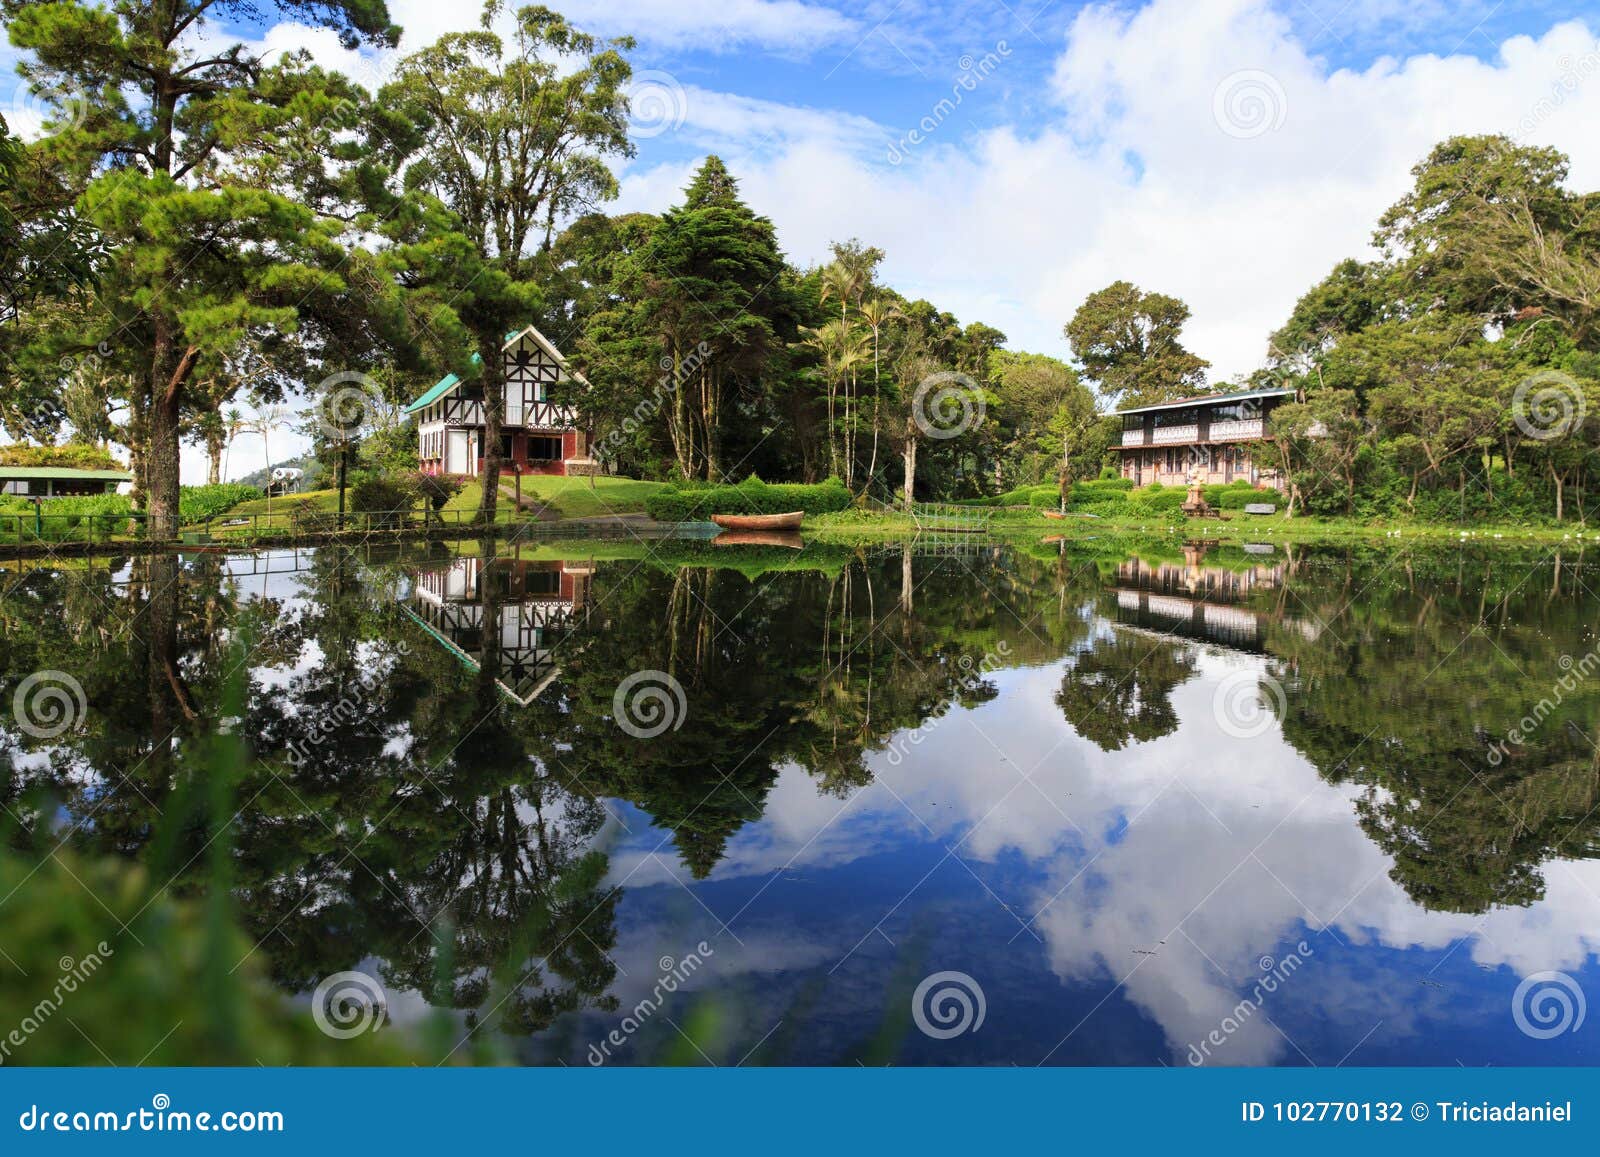 lake house with canoe at the selva negra nicaragua